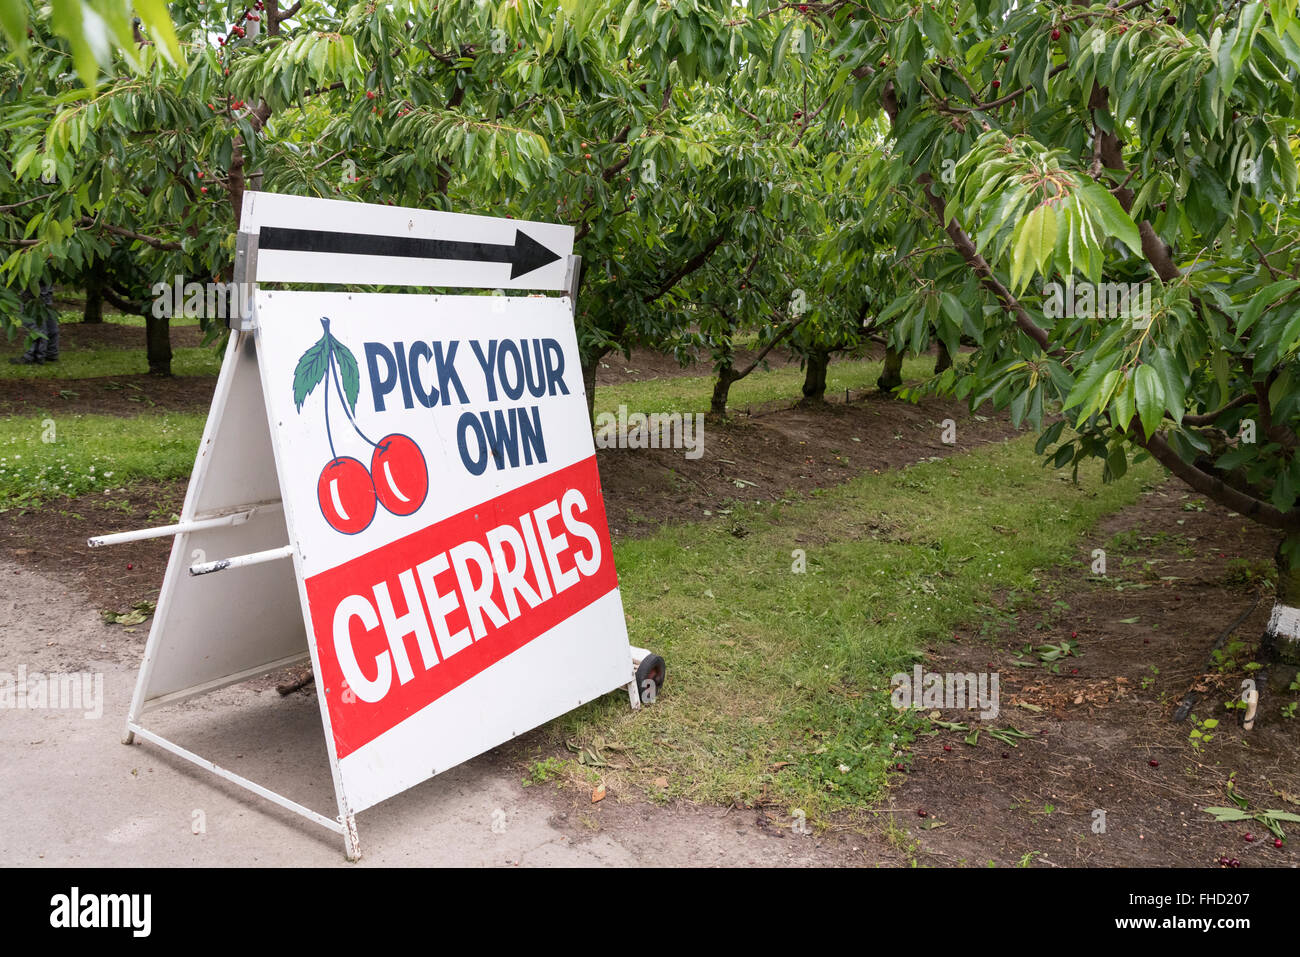 Pick your own cherries at Blenheim, New Zealand. Stock Photo